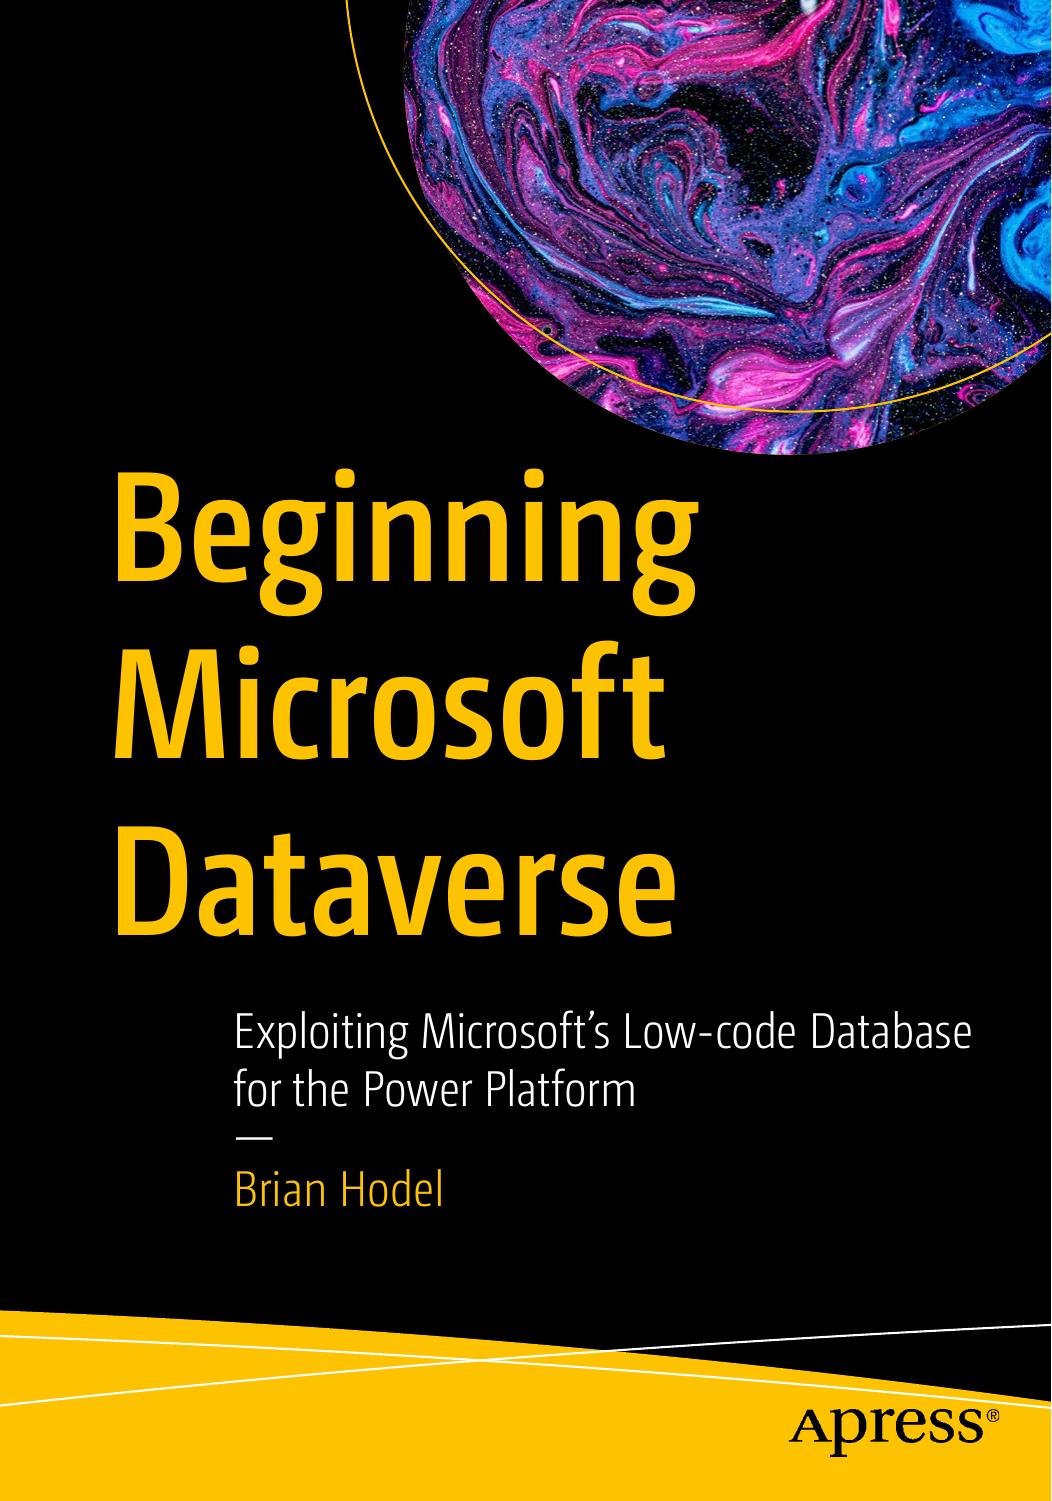 Beginning Microsoft Dataverse: Exploiting Microsoft’s Low-Code Database for the Power Platform